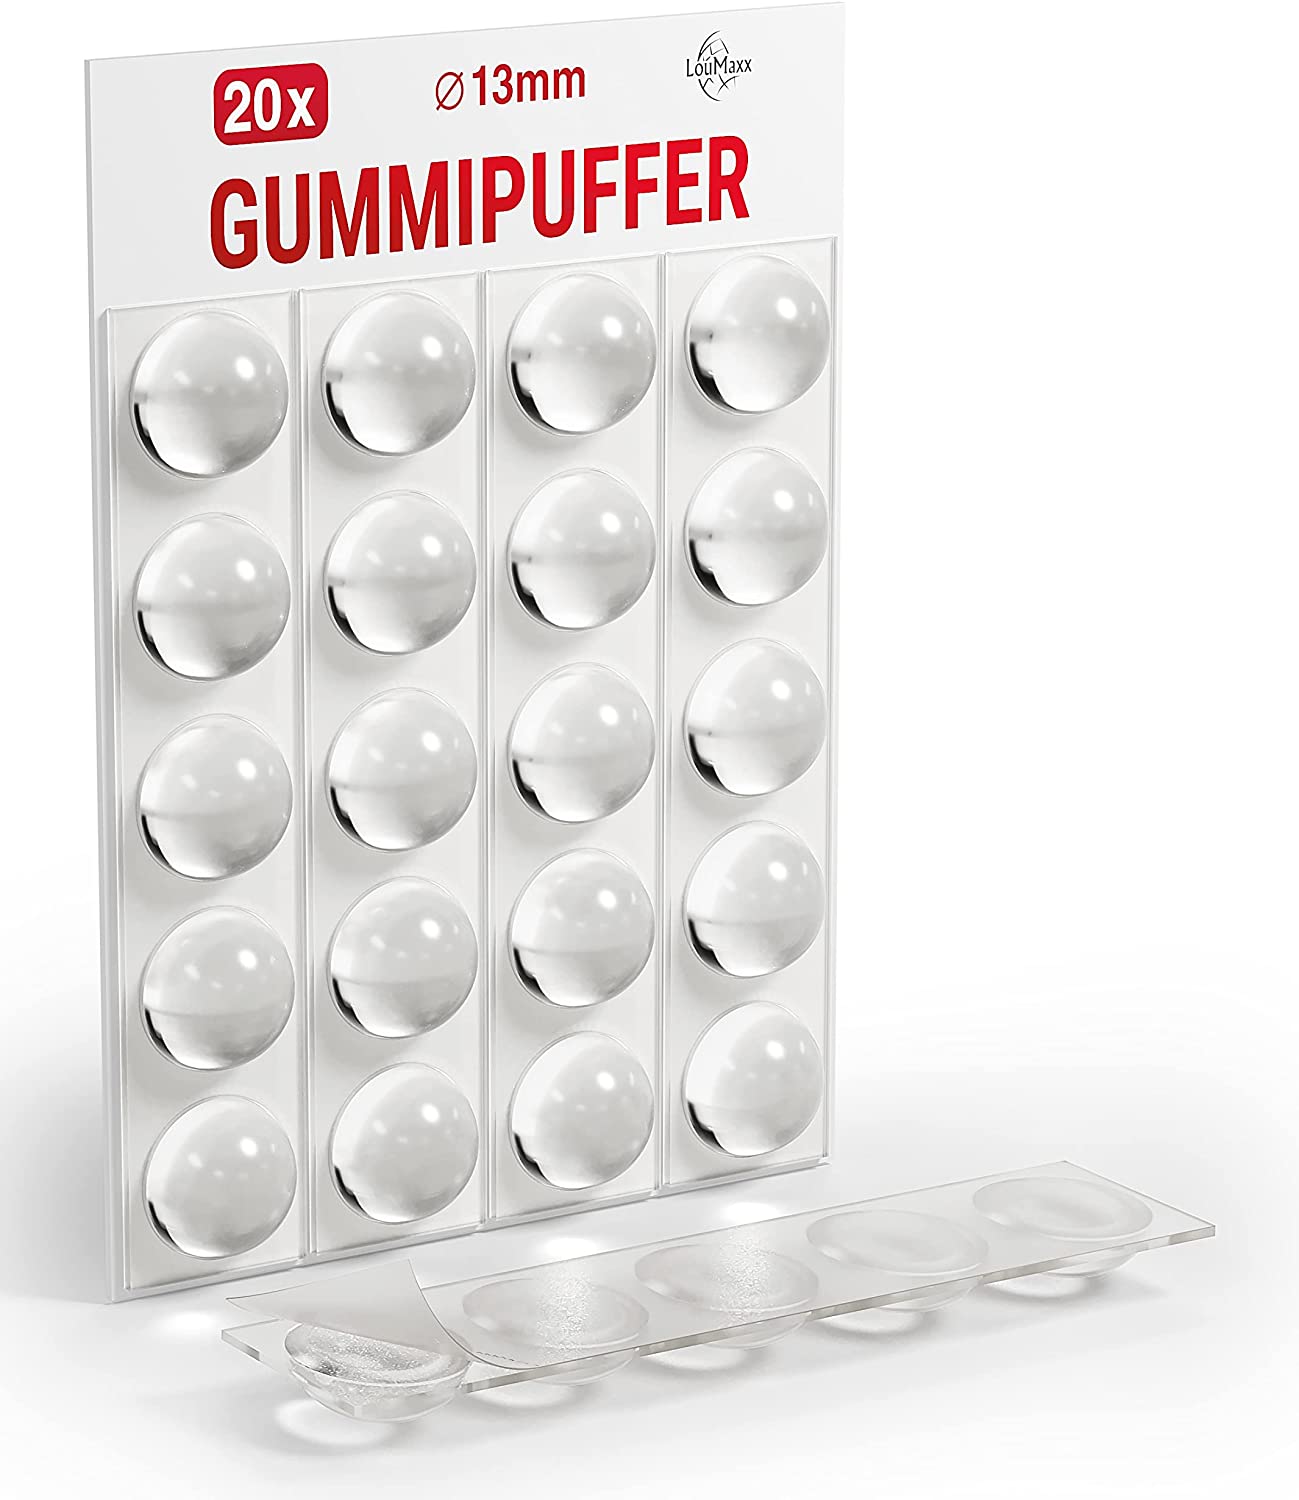 LouMaxx Gummipuffer - 20x Puffer transparent 13mm Ø - Gumminoppen für Glasplatten – Elastikpuffer transparent selbstklebend